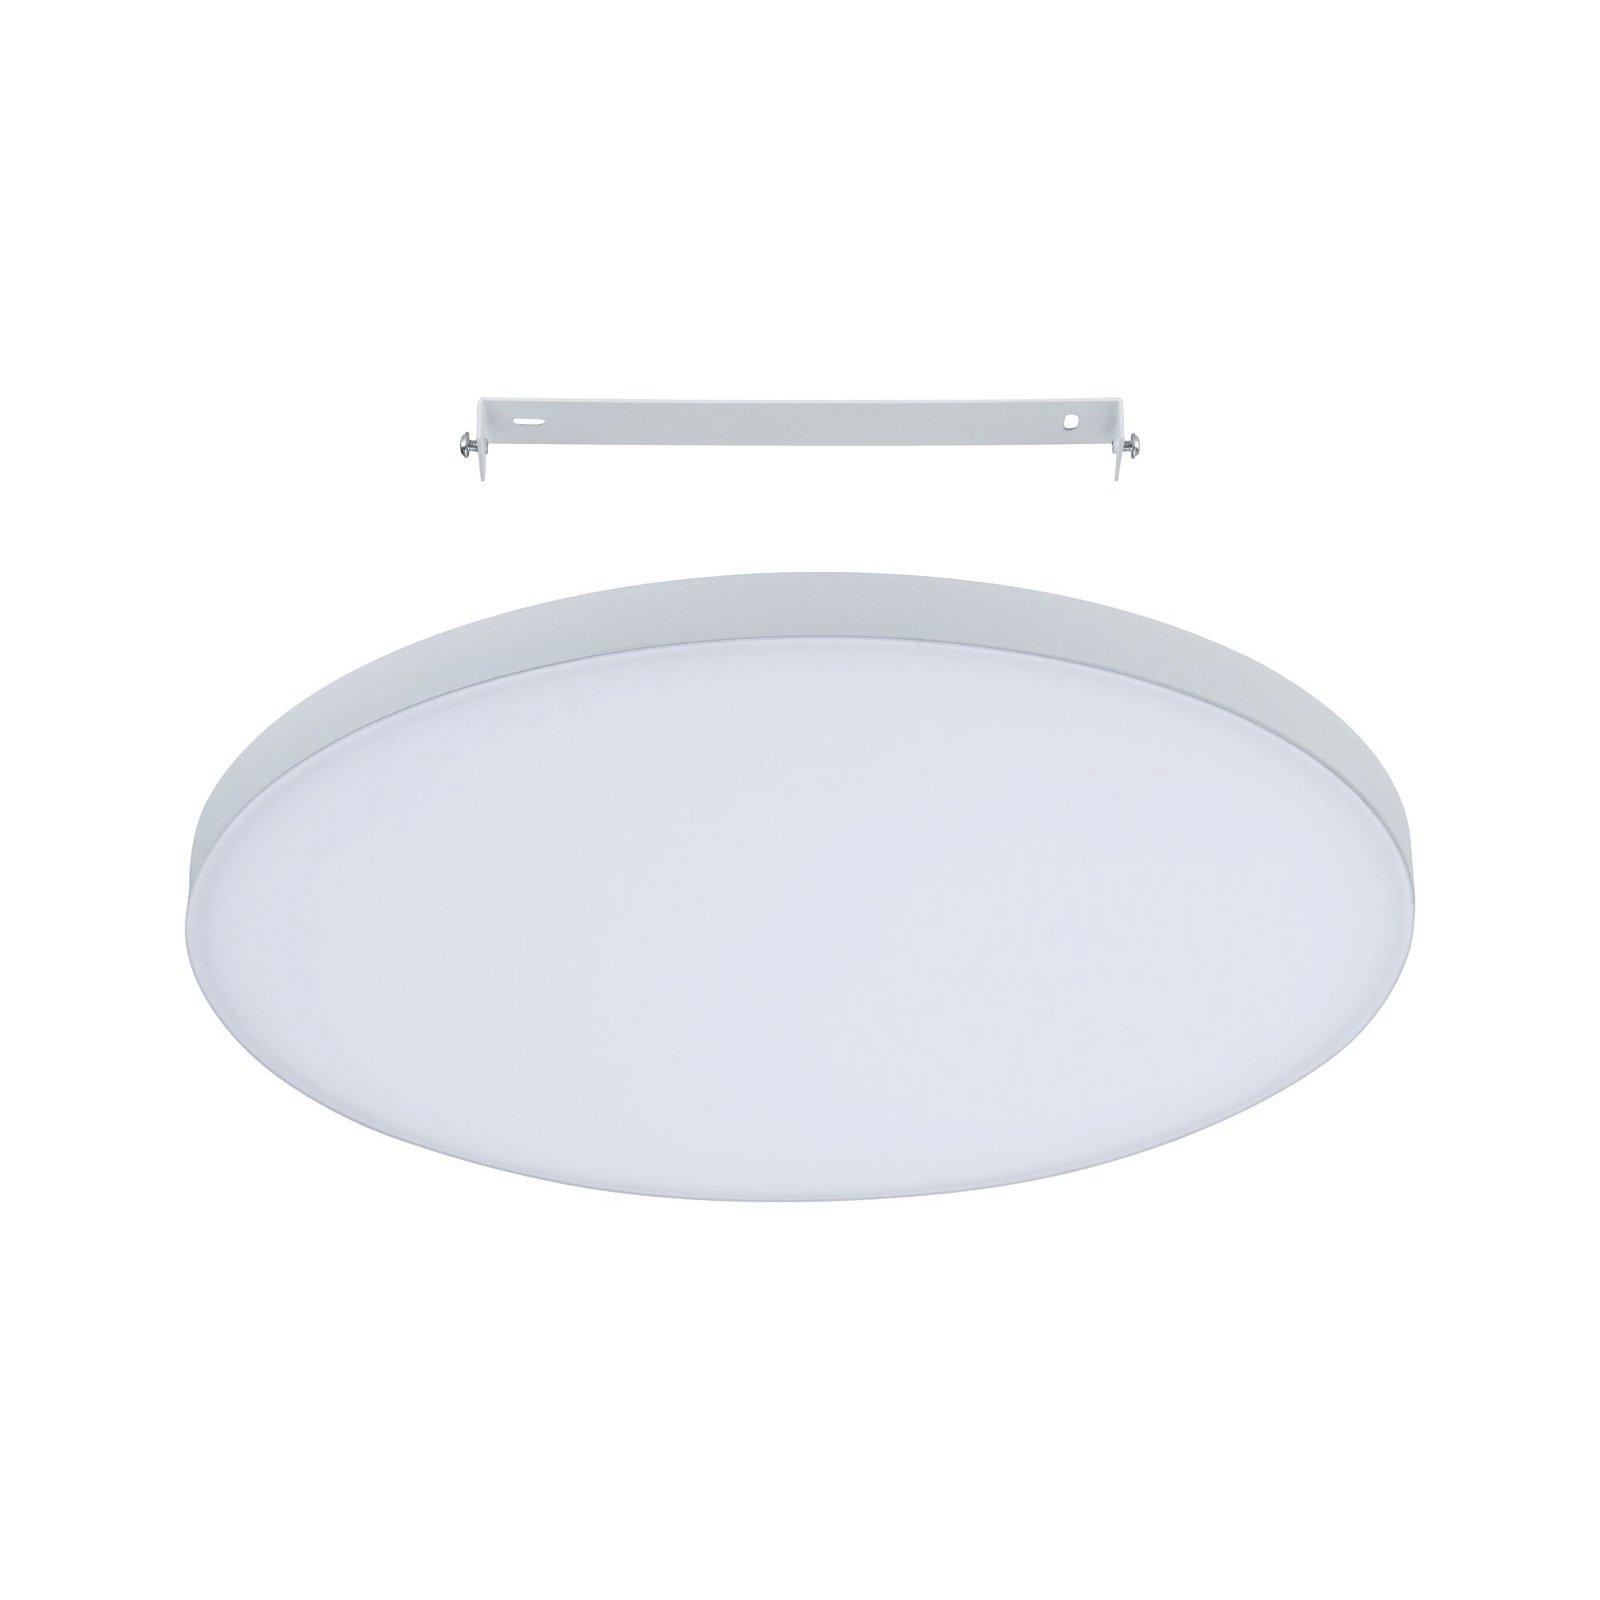 LED Panel Smart Home Zigbee Velora rund 400mm 22W 2200lm Tunable White Weiß dimmbar